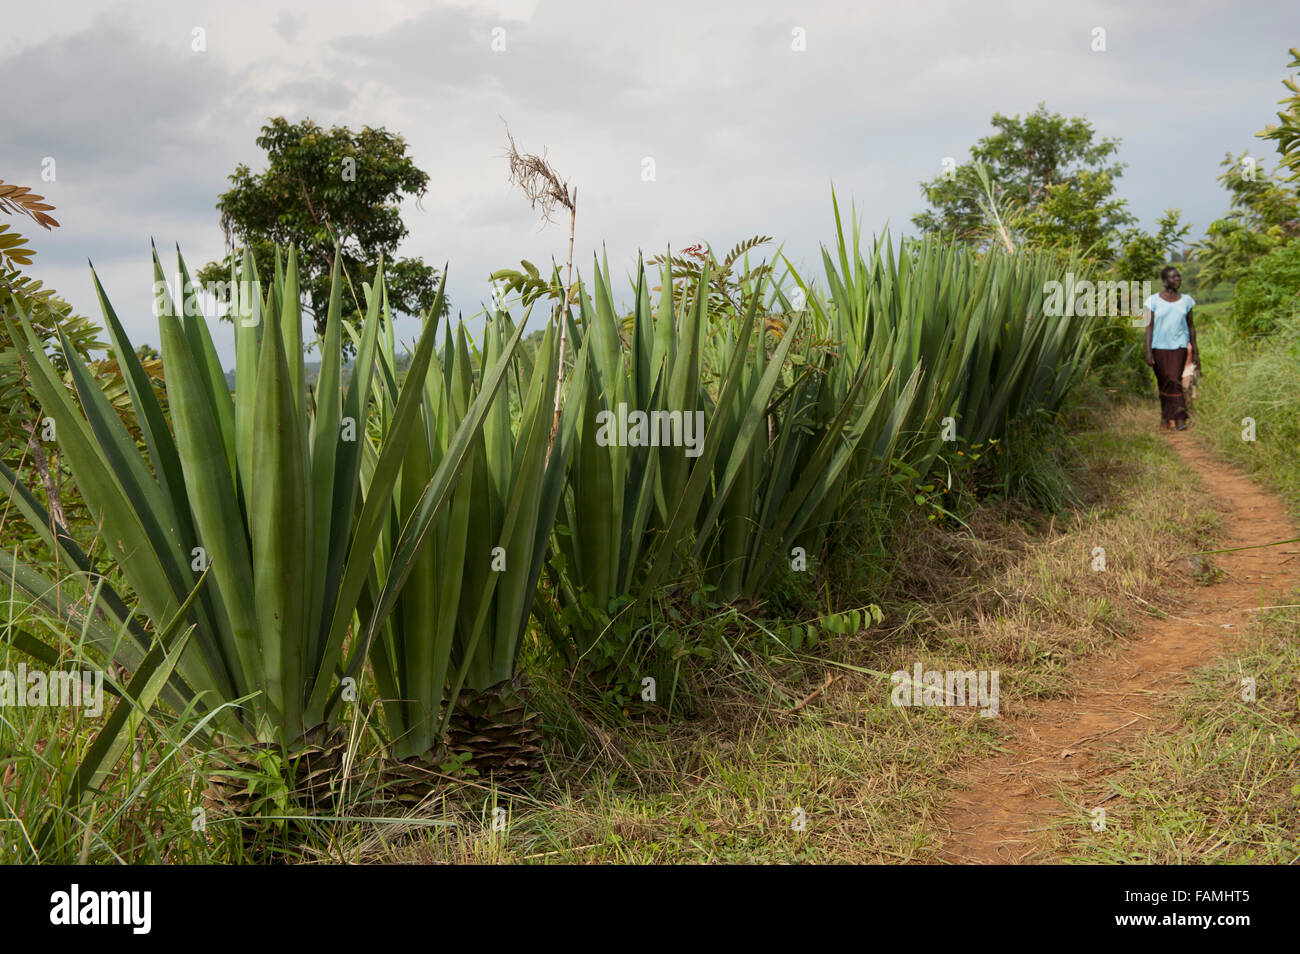 Footpath with Sisal plant, Agave sisalana,  used for making rope, growing alongside, Kenya. Stock Photo